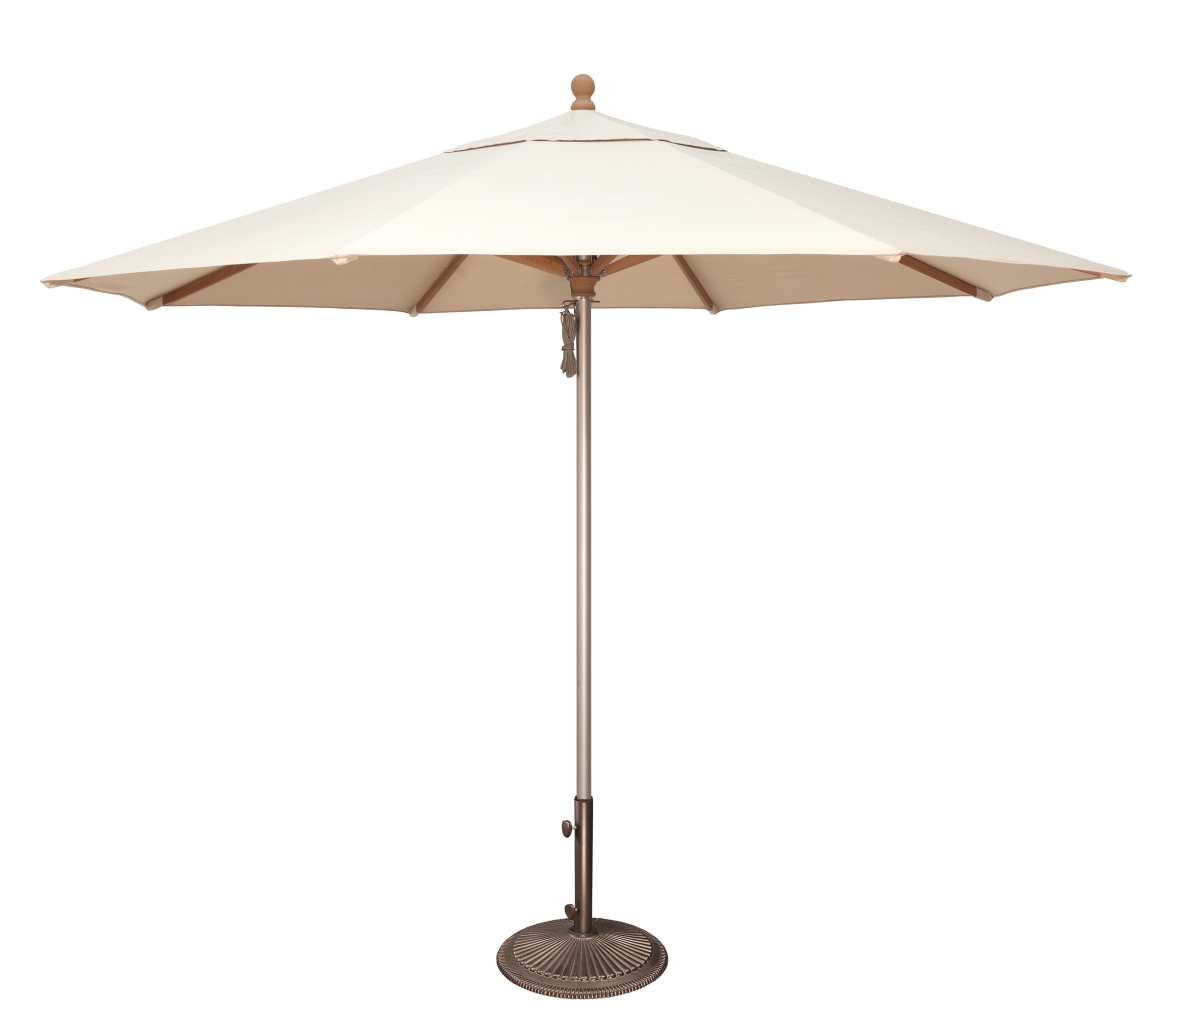 Simplyshade Ssuwa811ss-a5404 Ibiza 11 Ft. Sunbrella Wood & Aluminum Umbrella White